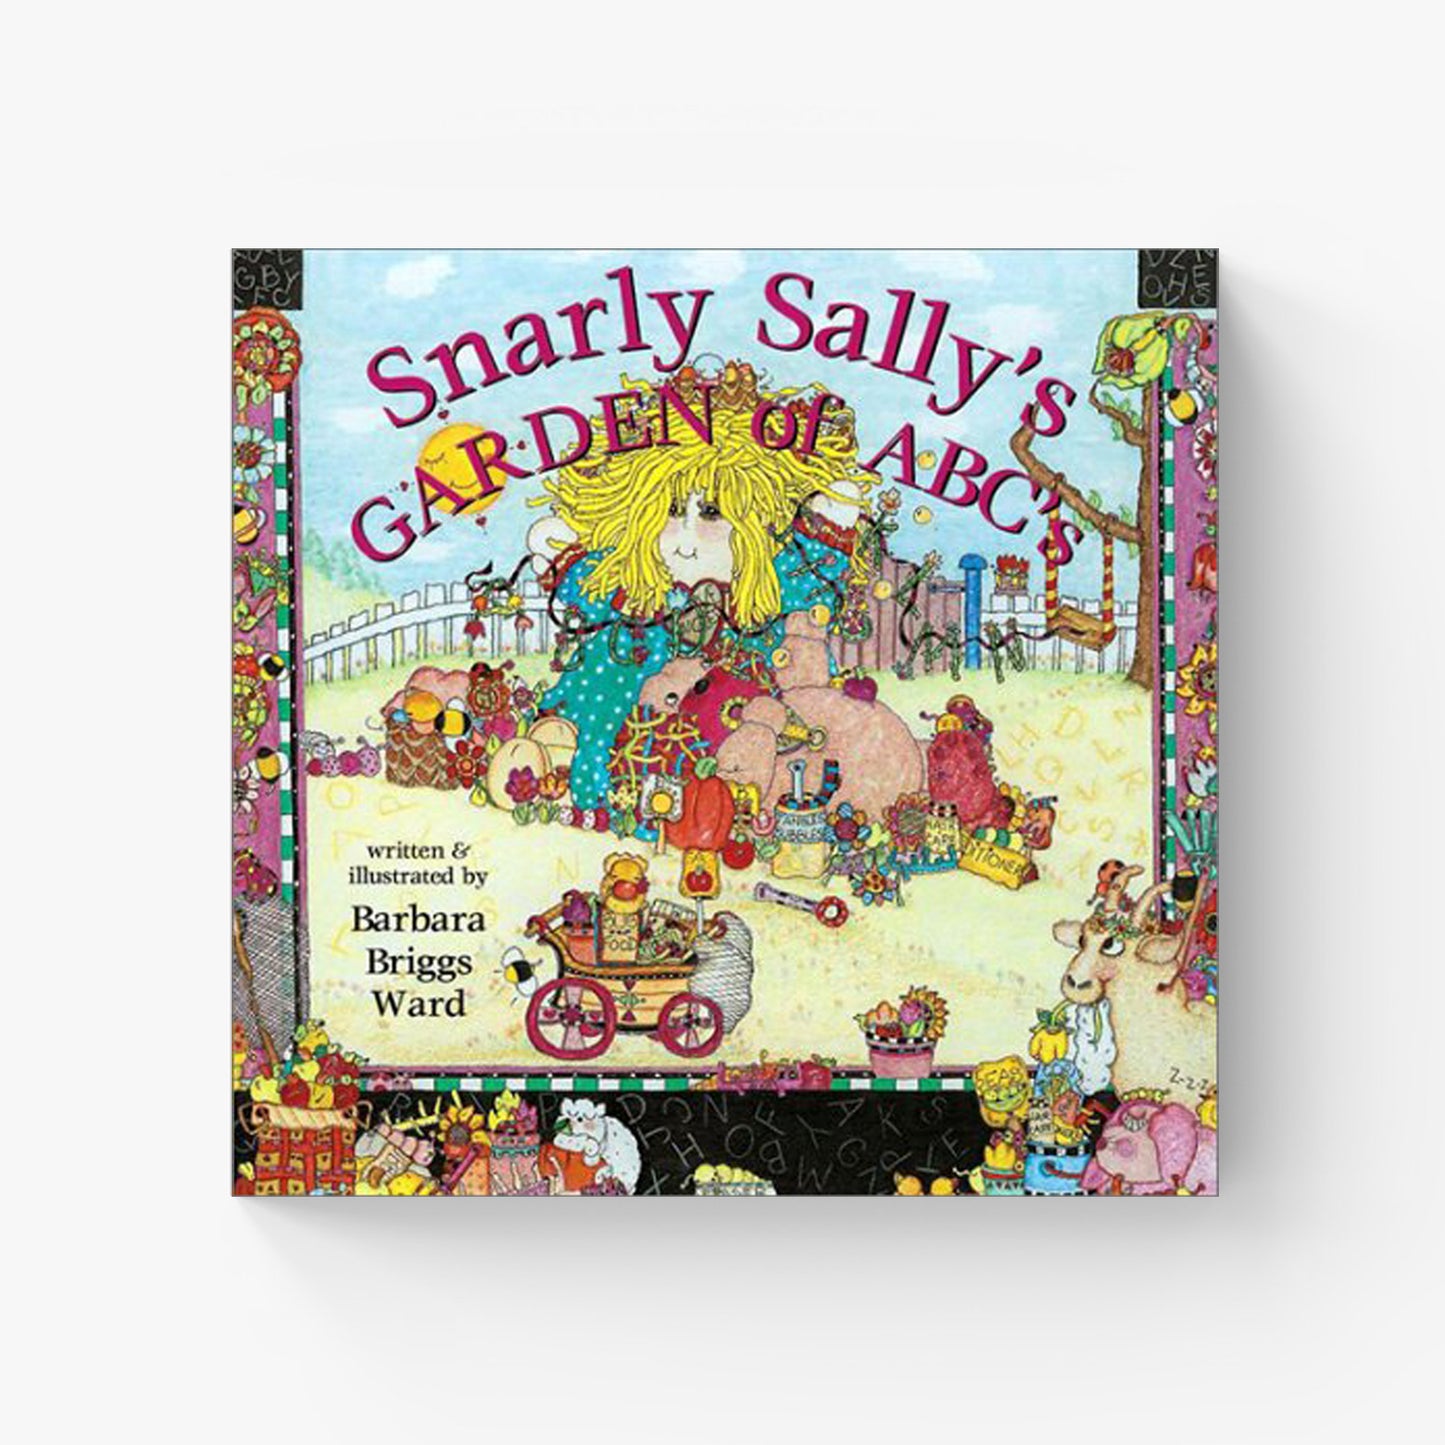 Snarly Sally's Garden of ABCs